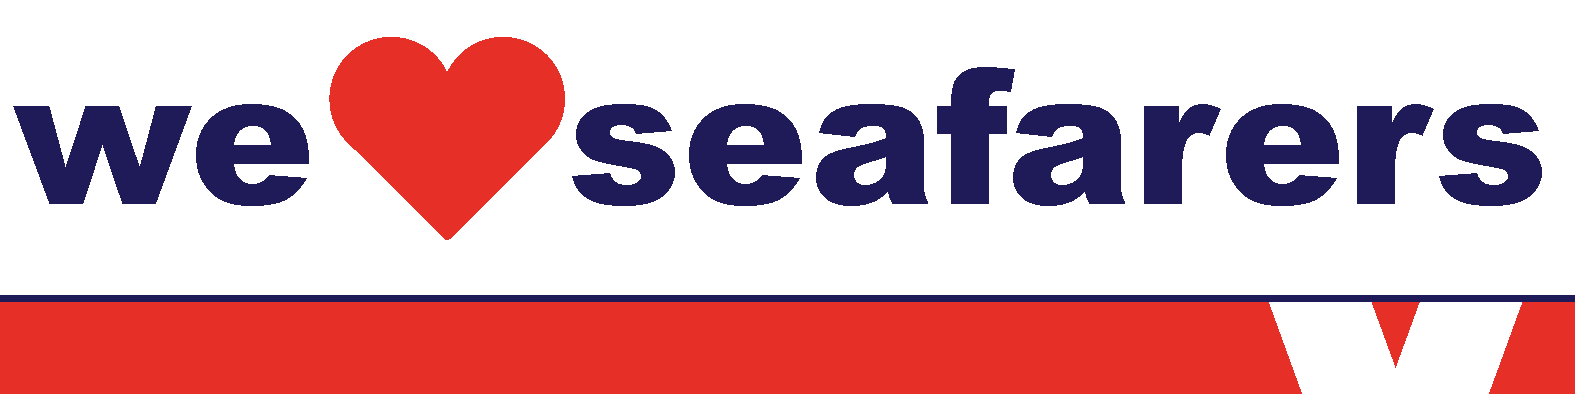 Seafarers sticker Vroon